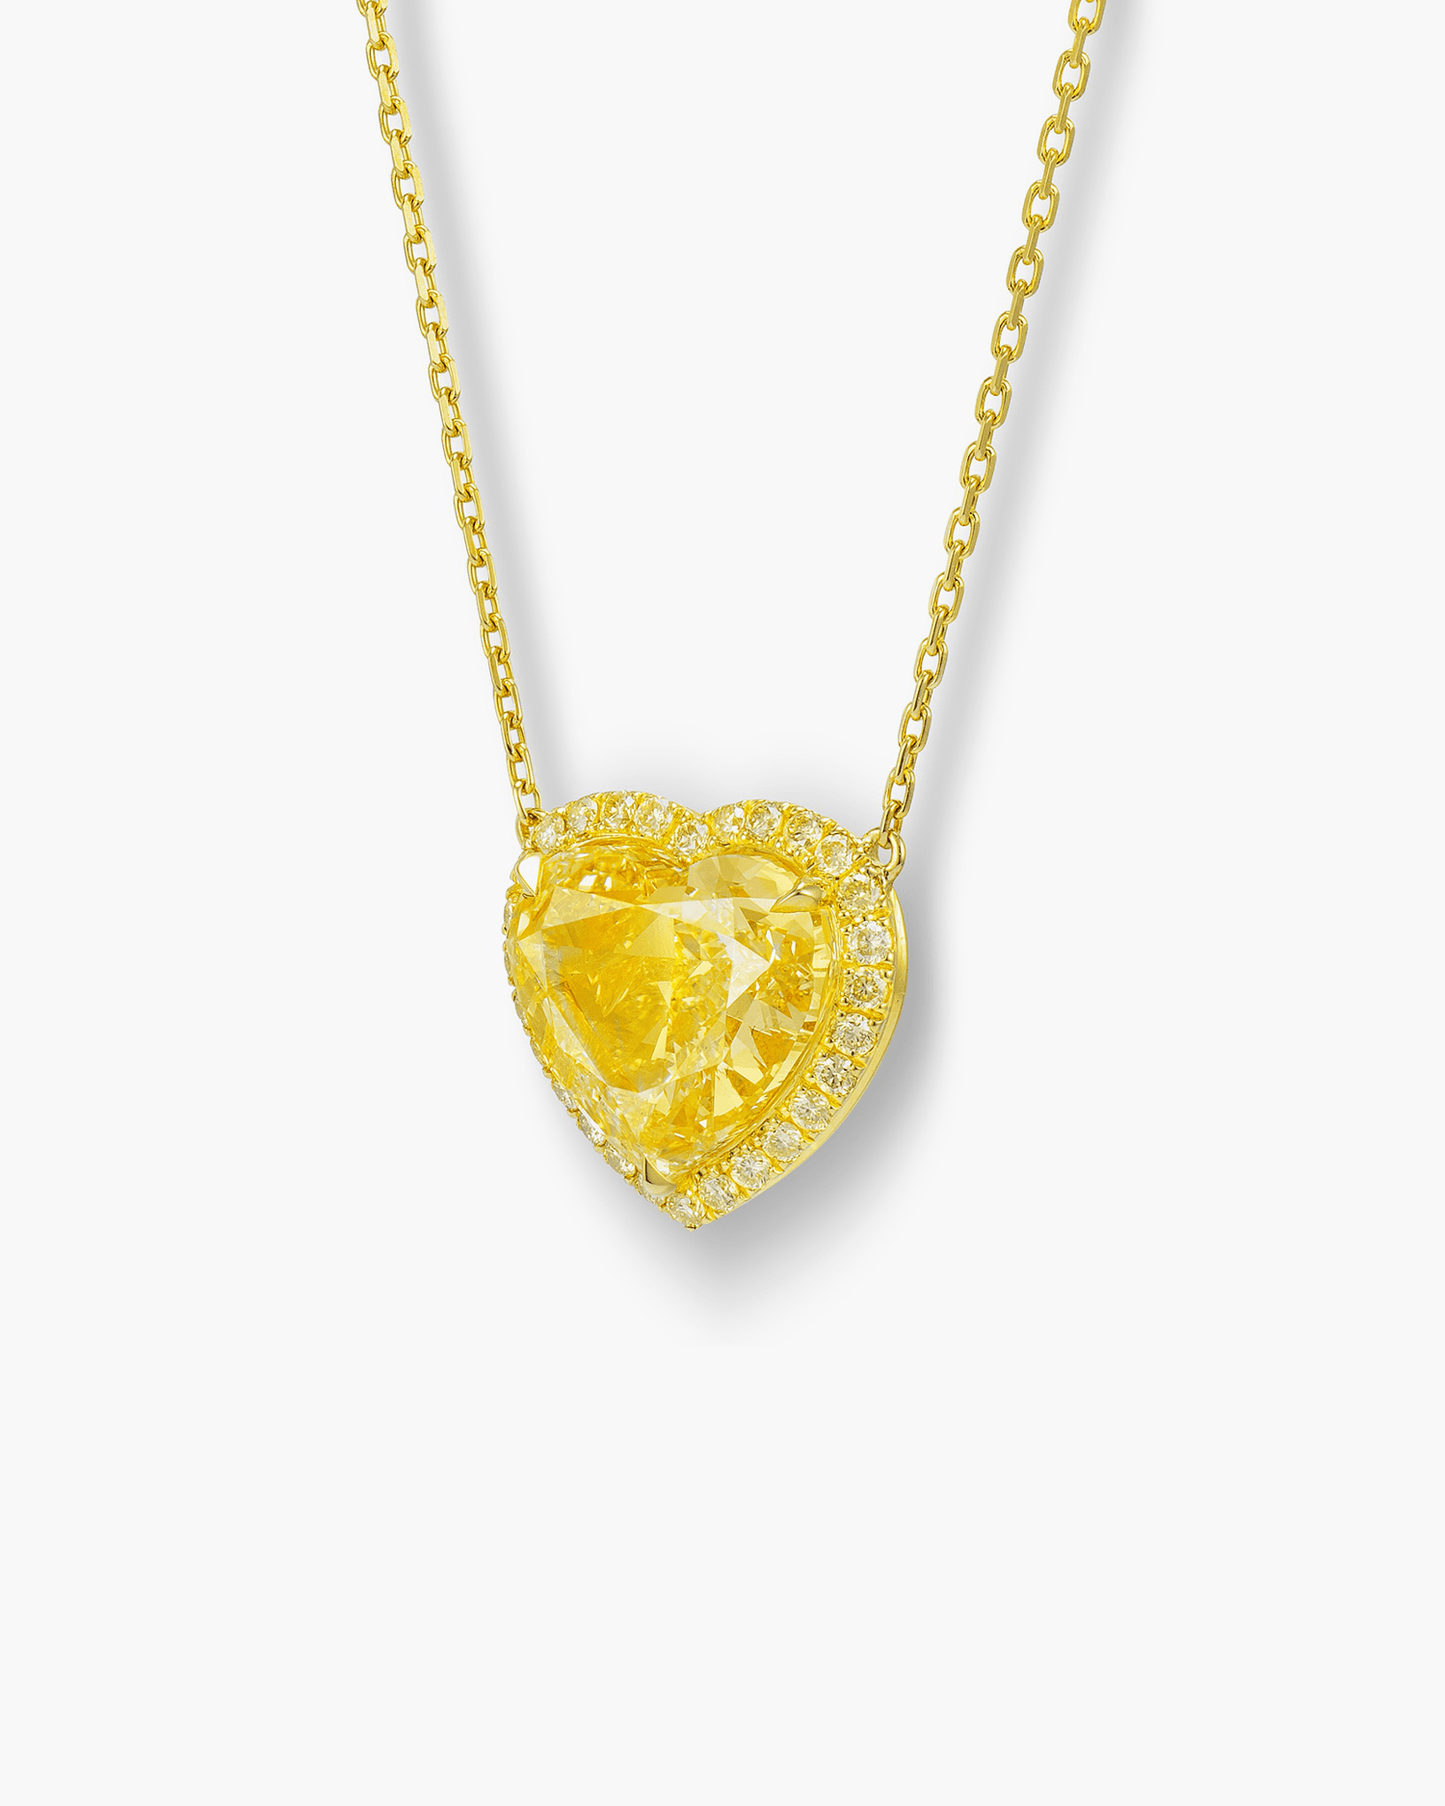 3.74 carat Heart Shape Yellow Diamond Pendant Necklace